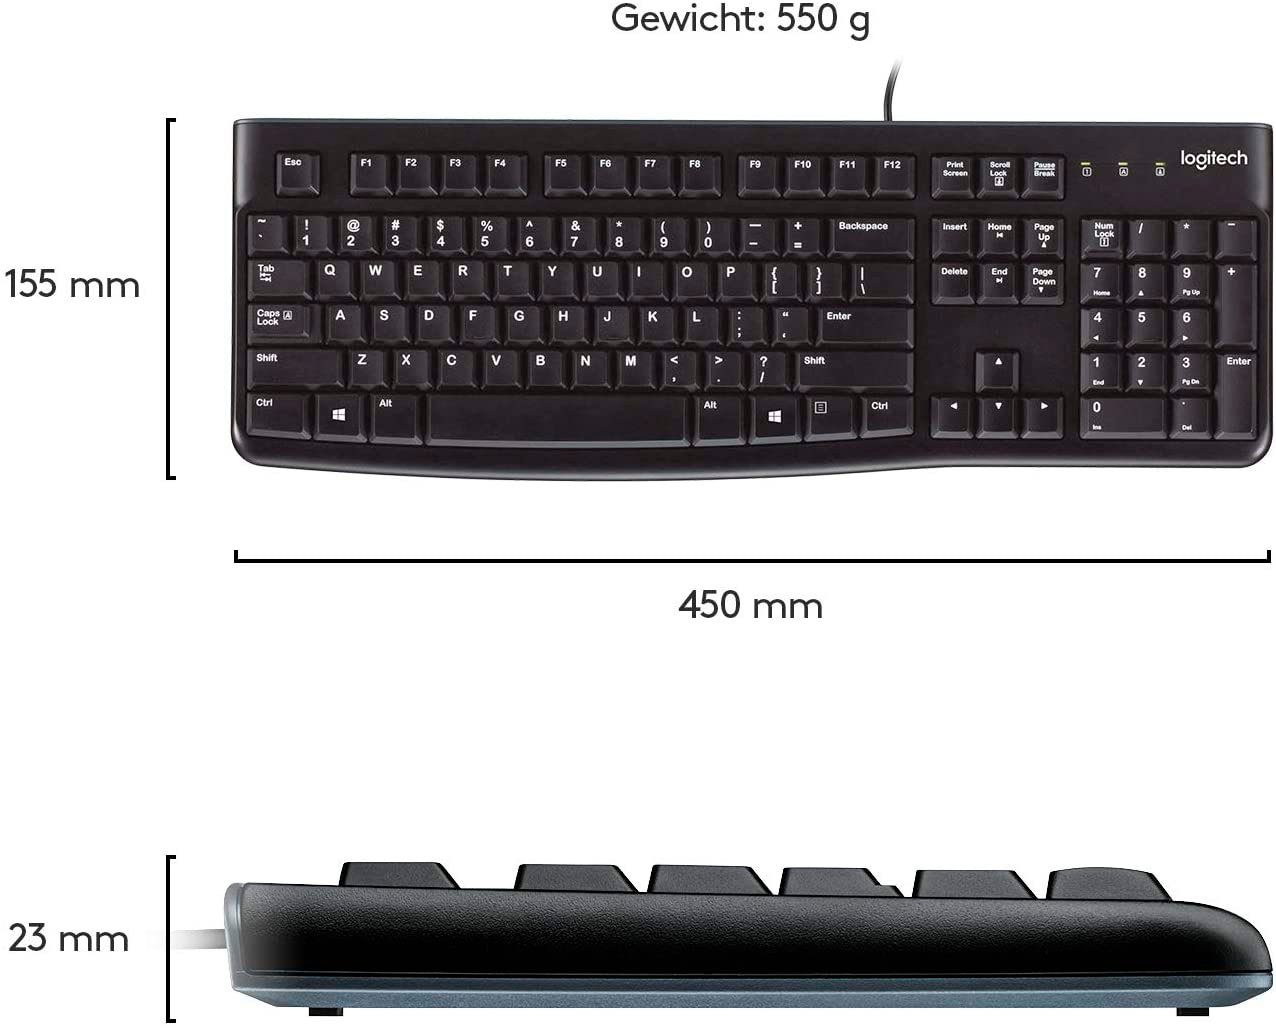 Business Keyboard Logitech for K120 PC-Tastatur Weiss